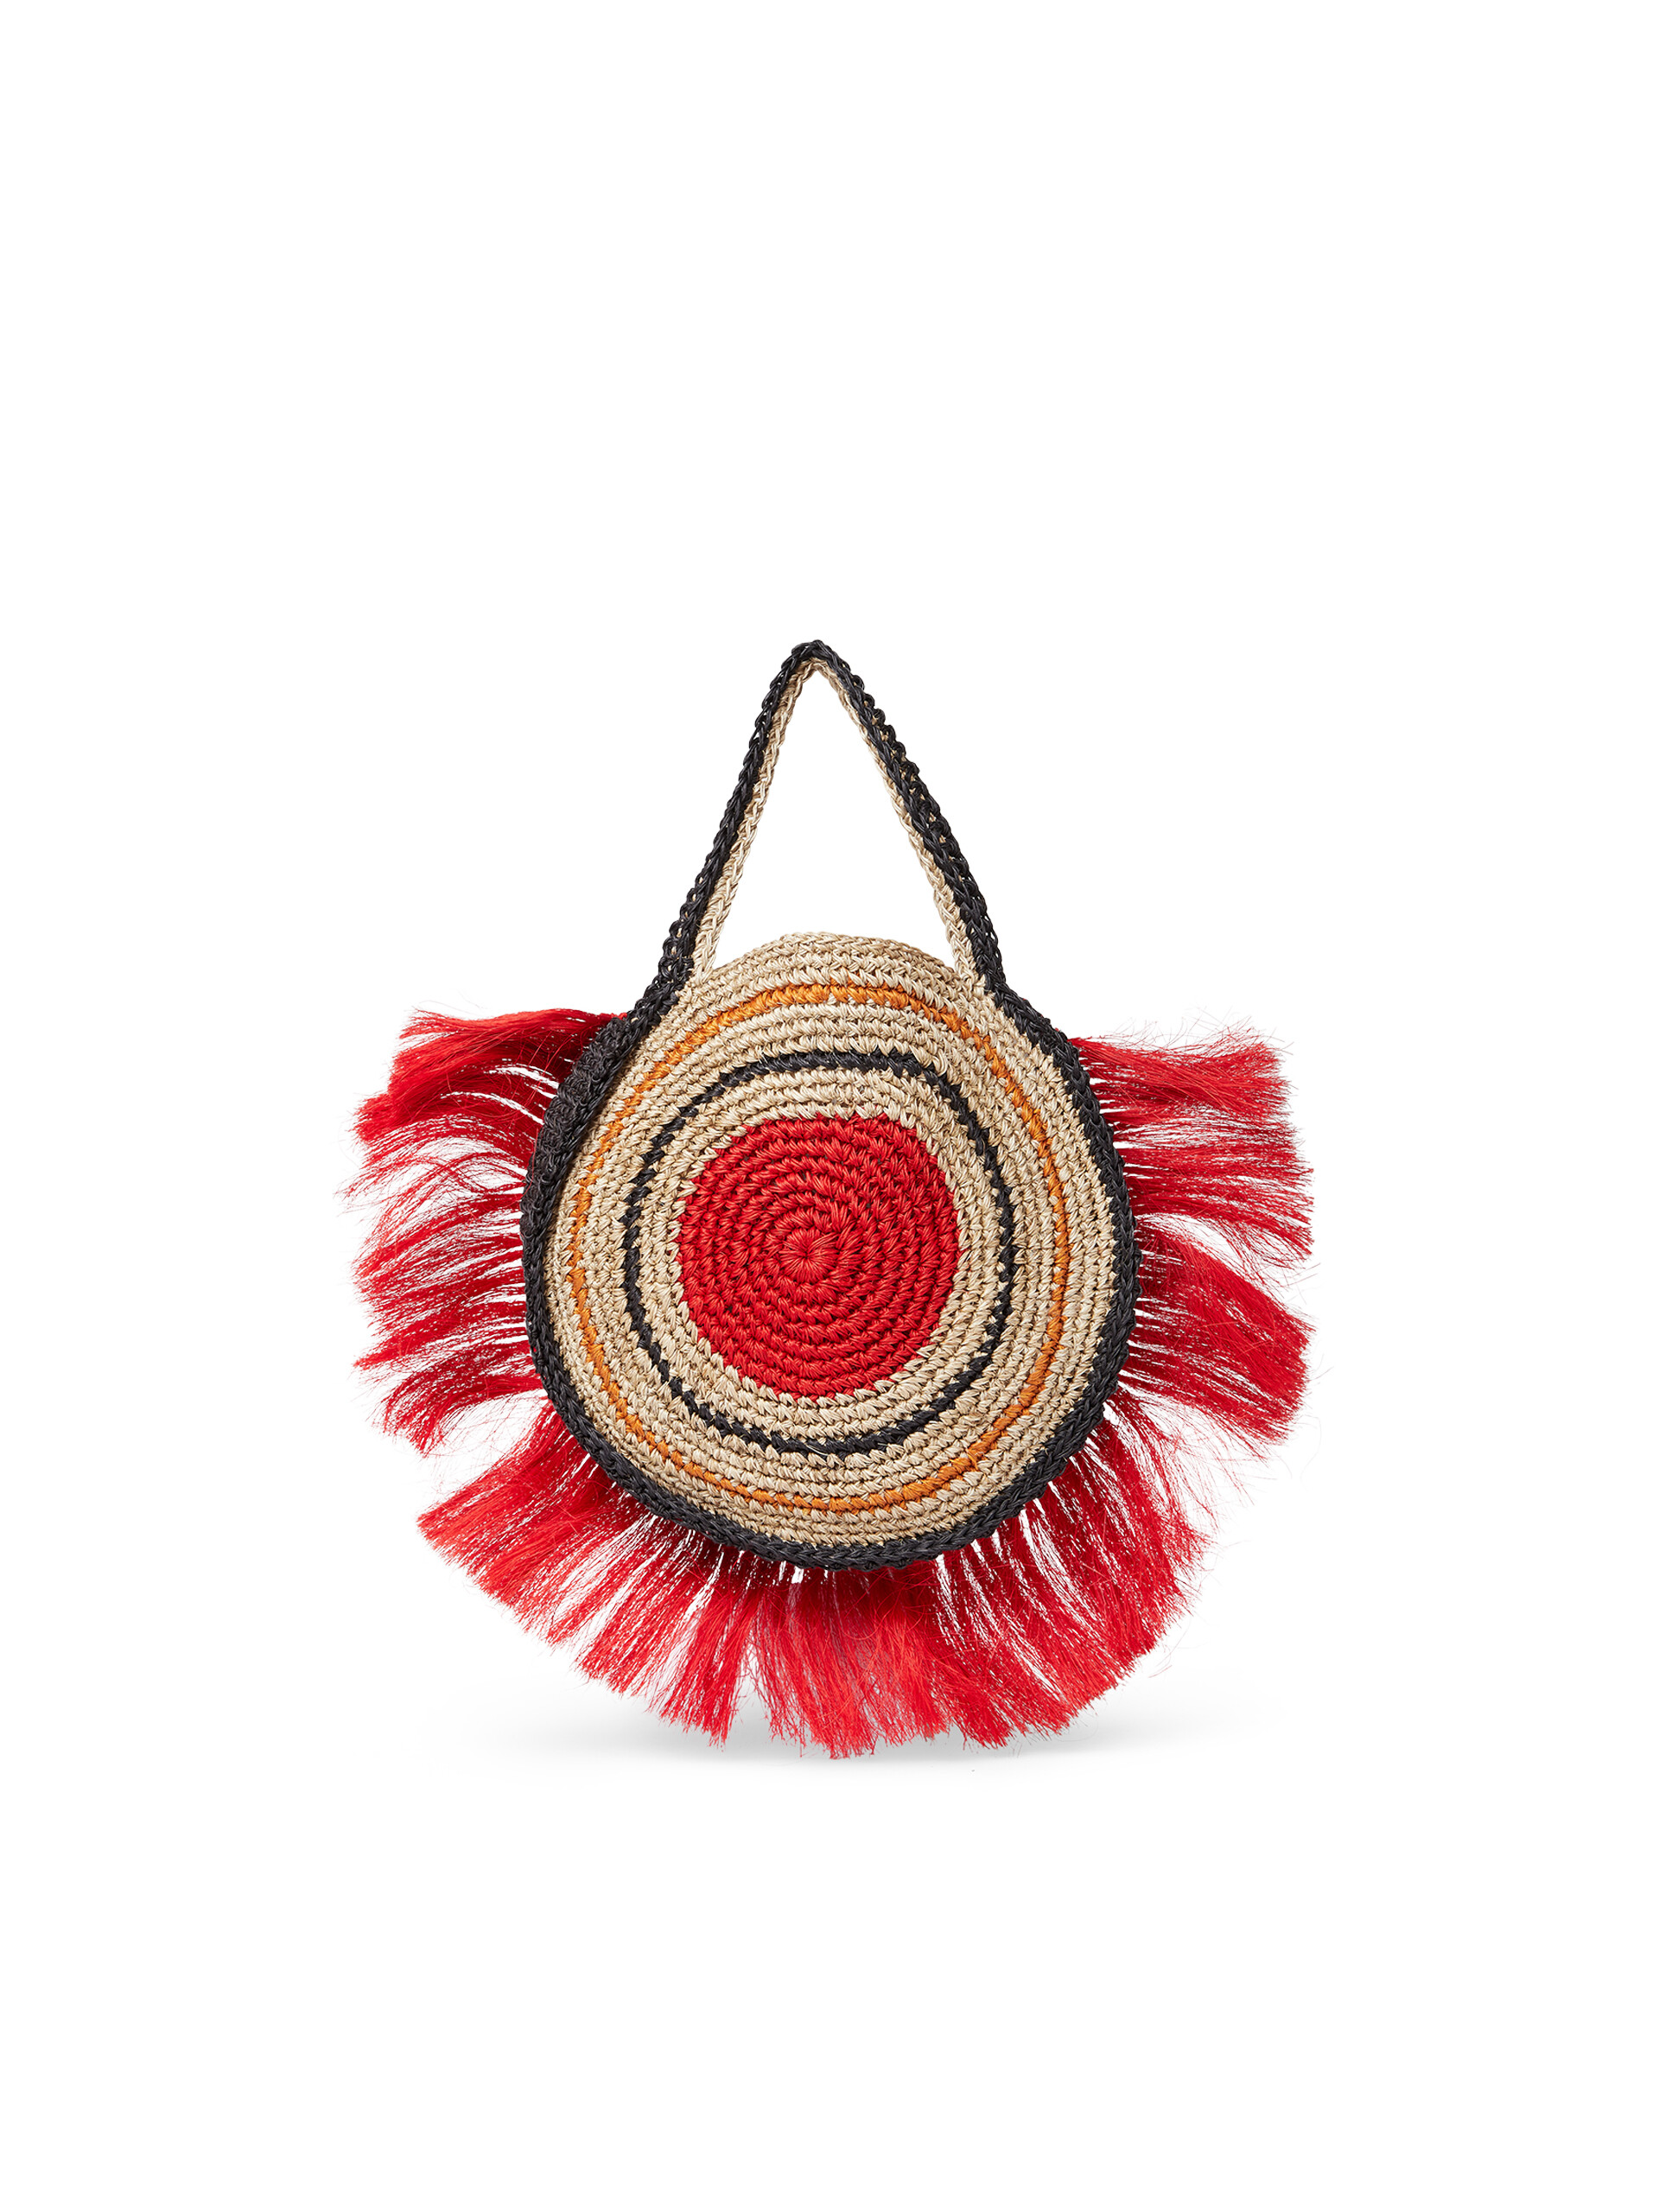 MARNI MARKET handbag in natural fibre with fringes - Bags - Image 3